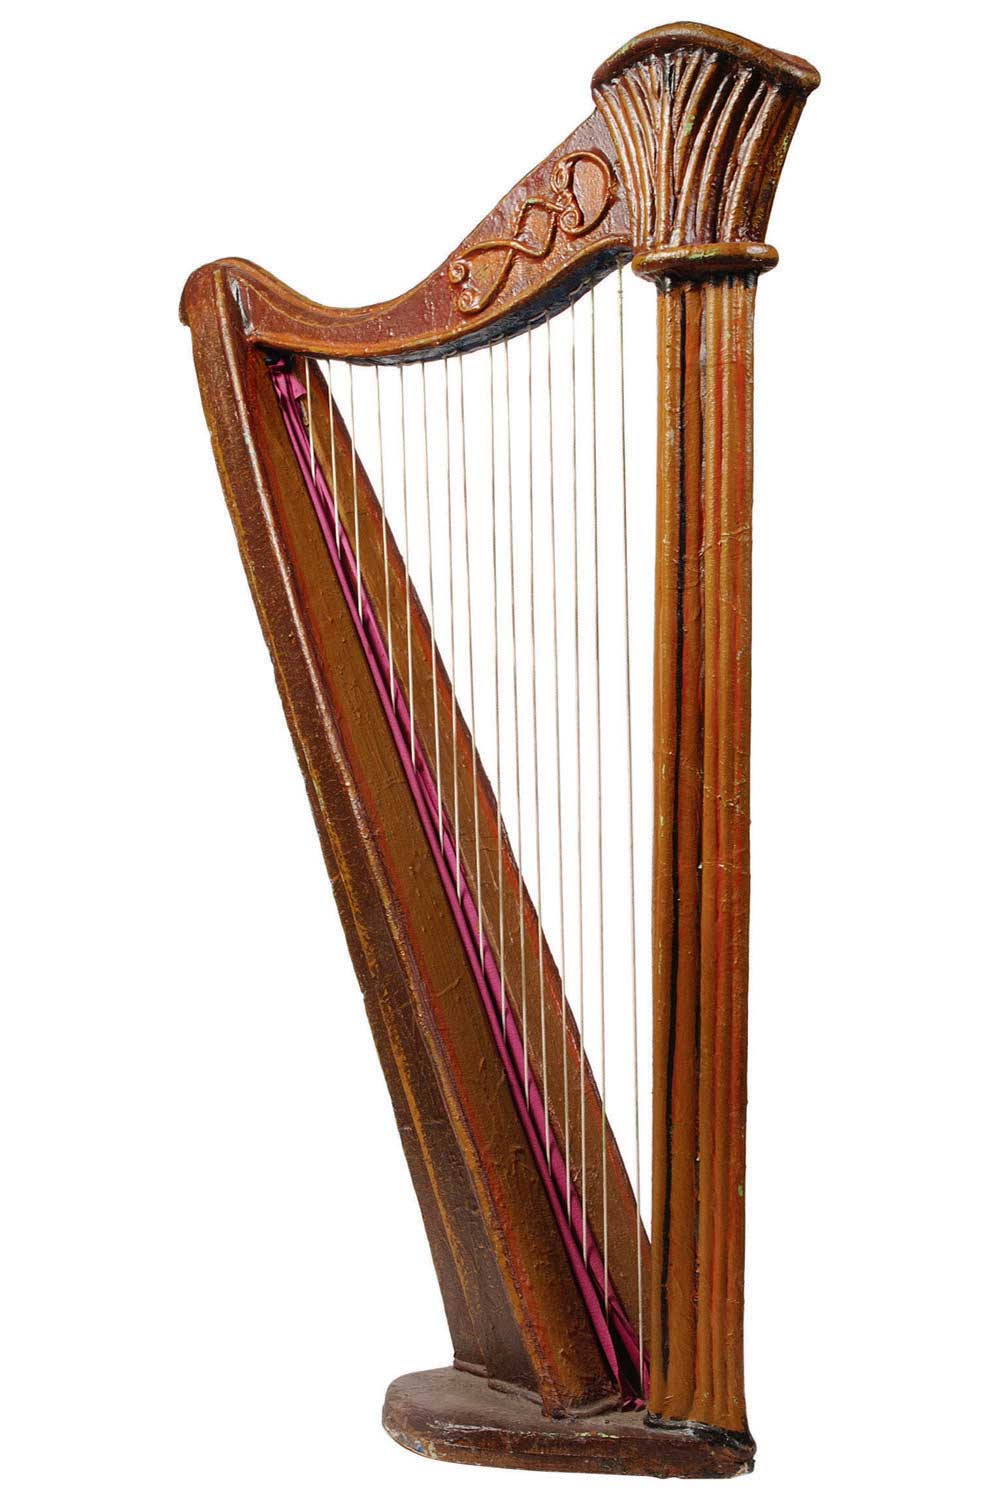 School of Magical Strings harp classes begin Oct. 16